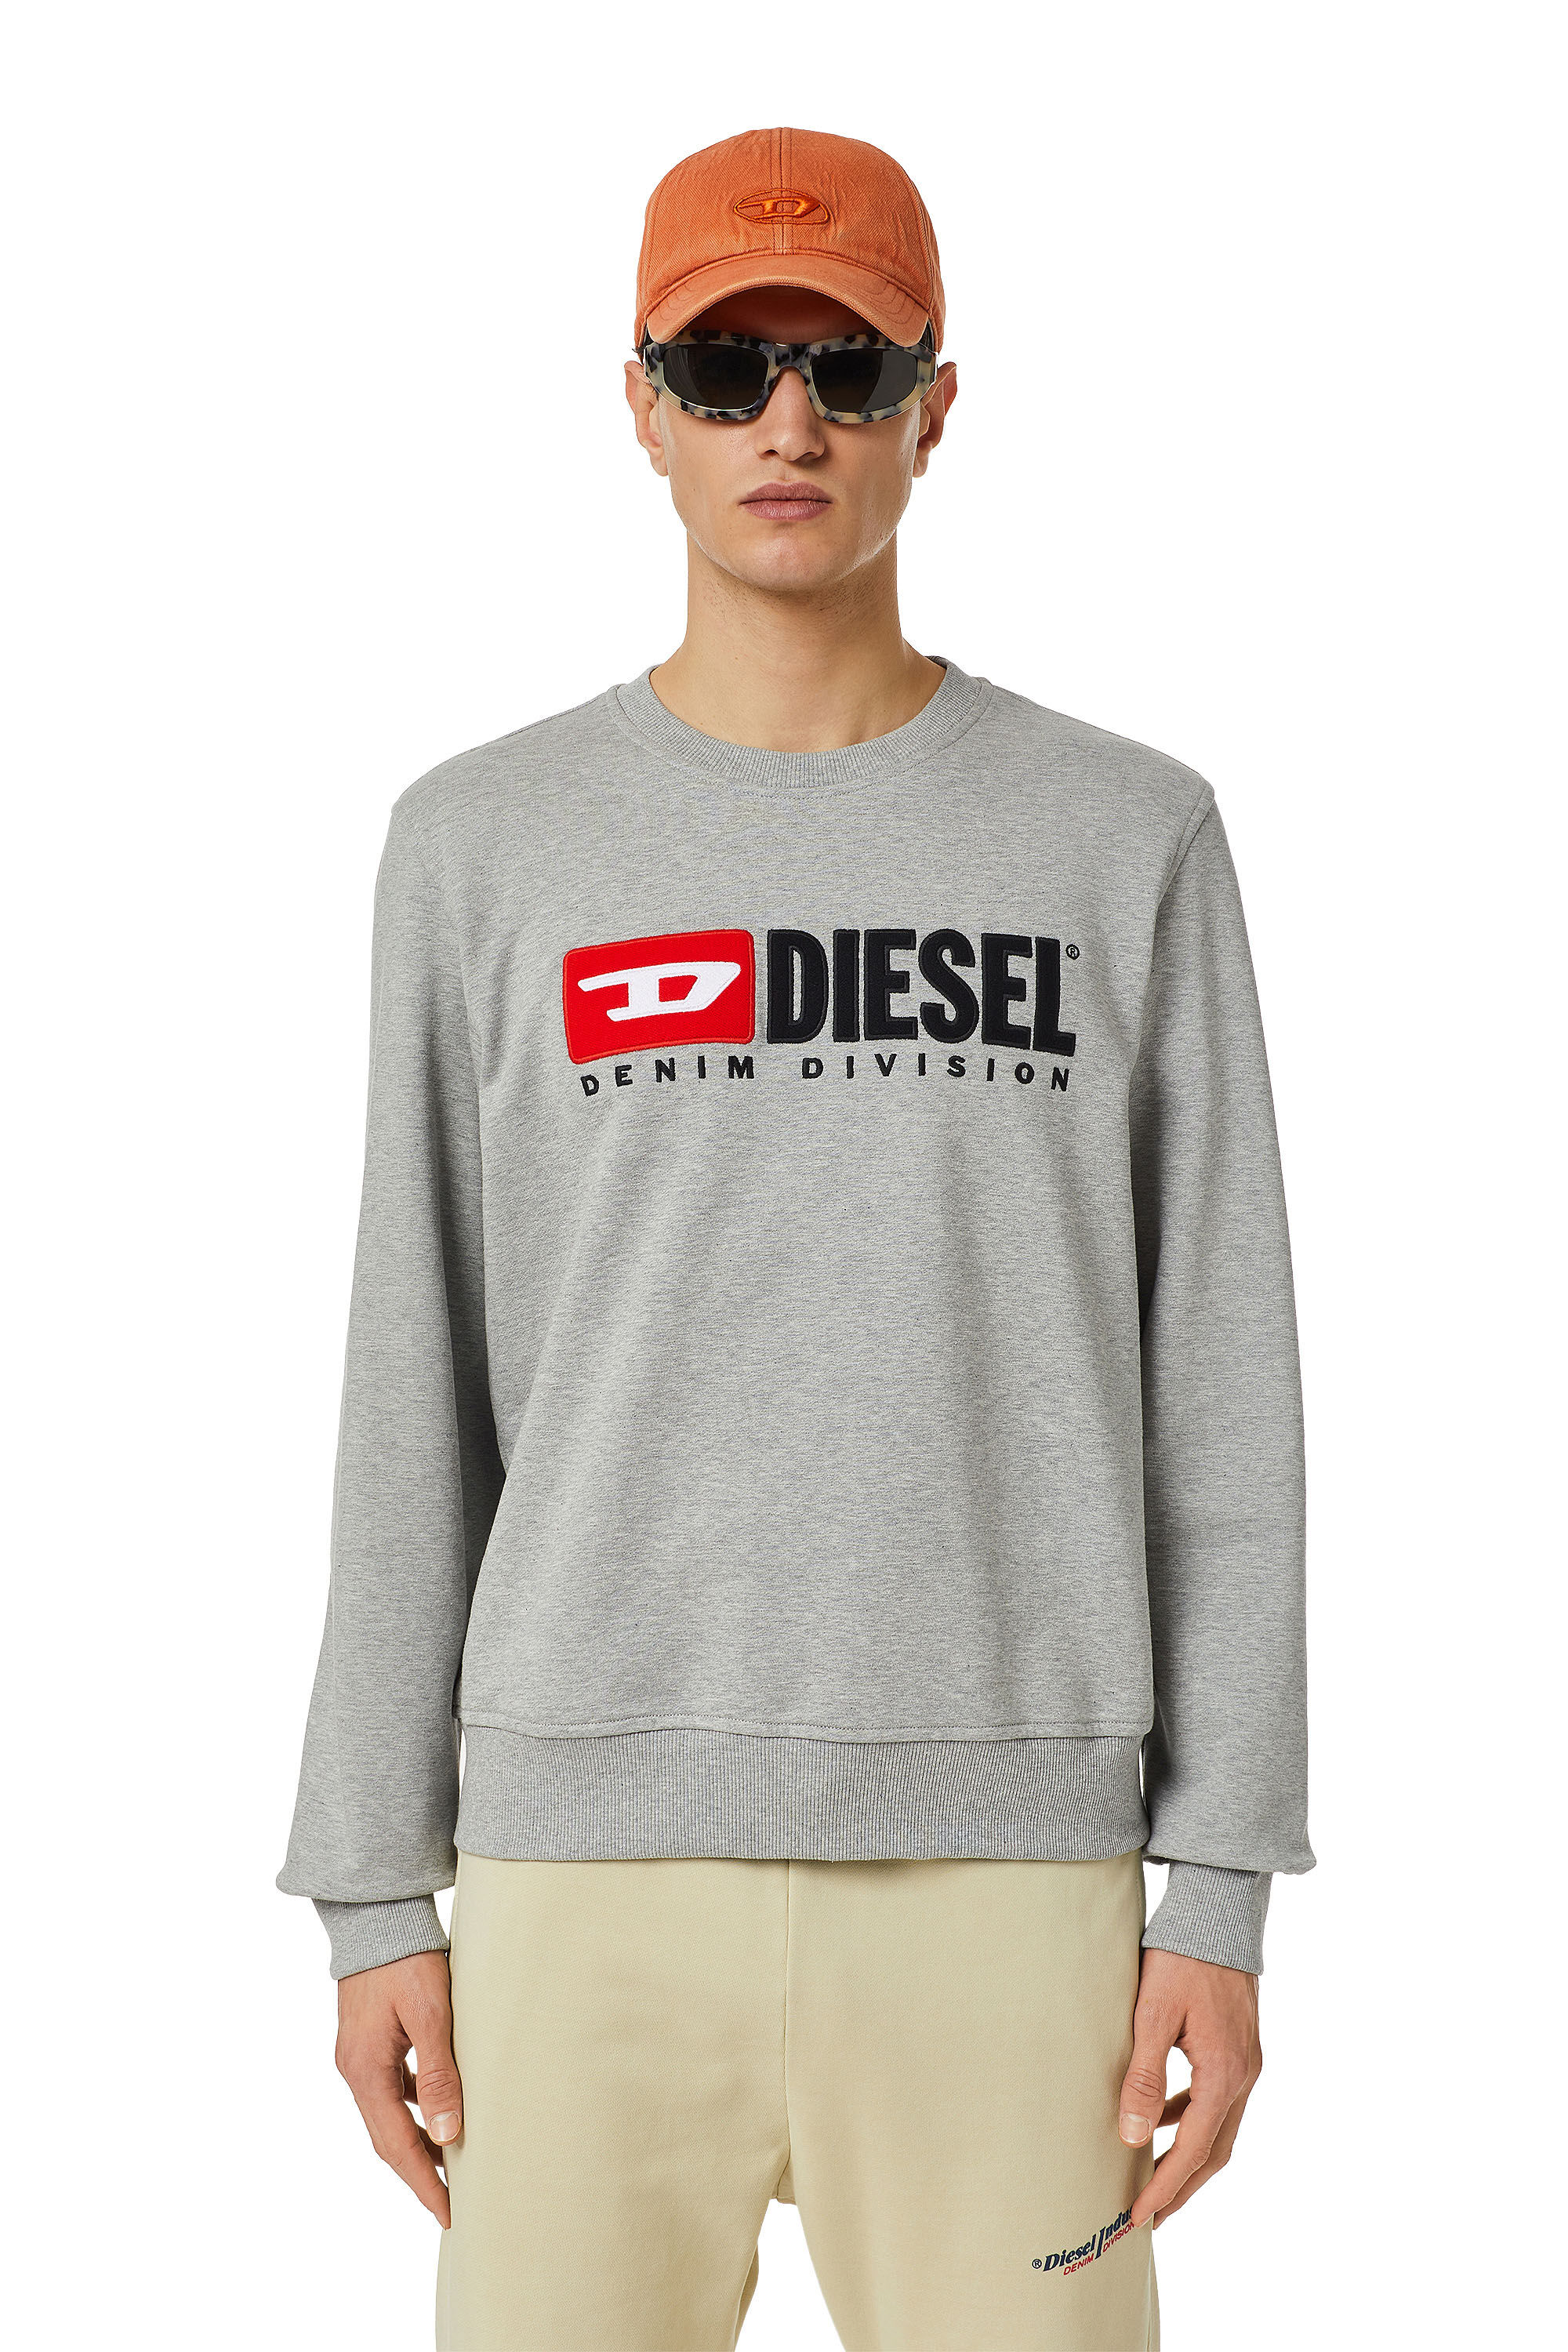 Diesel - S-GINN-DIV, Grey - Image 3